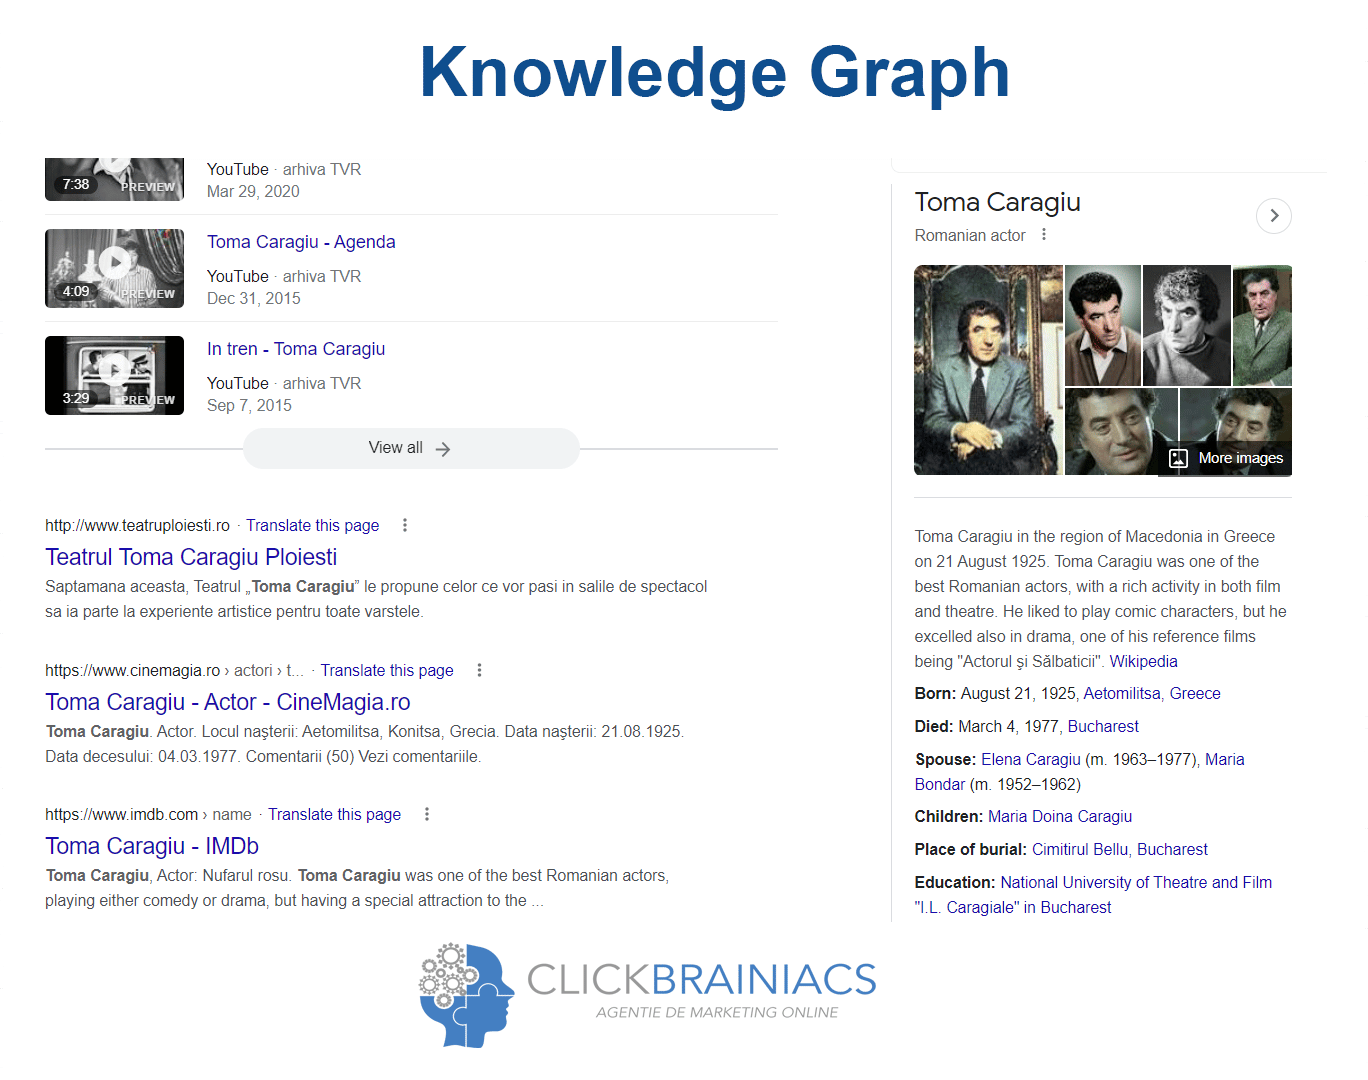 Ce este un knowledge graph